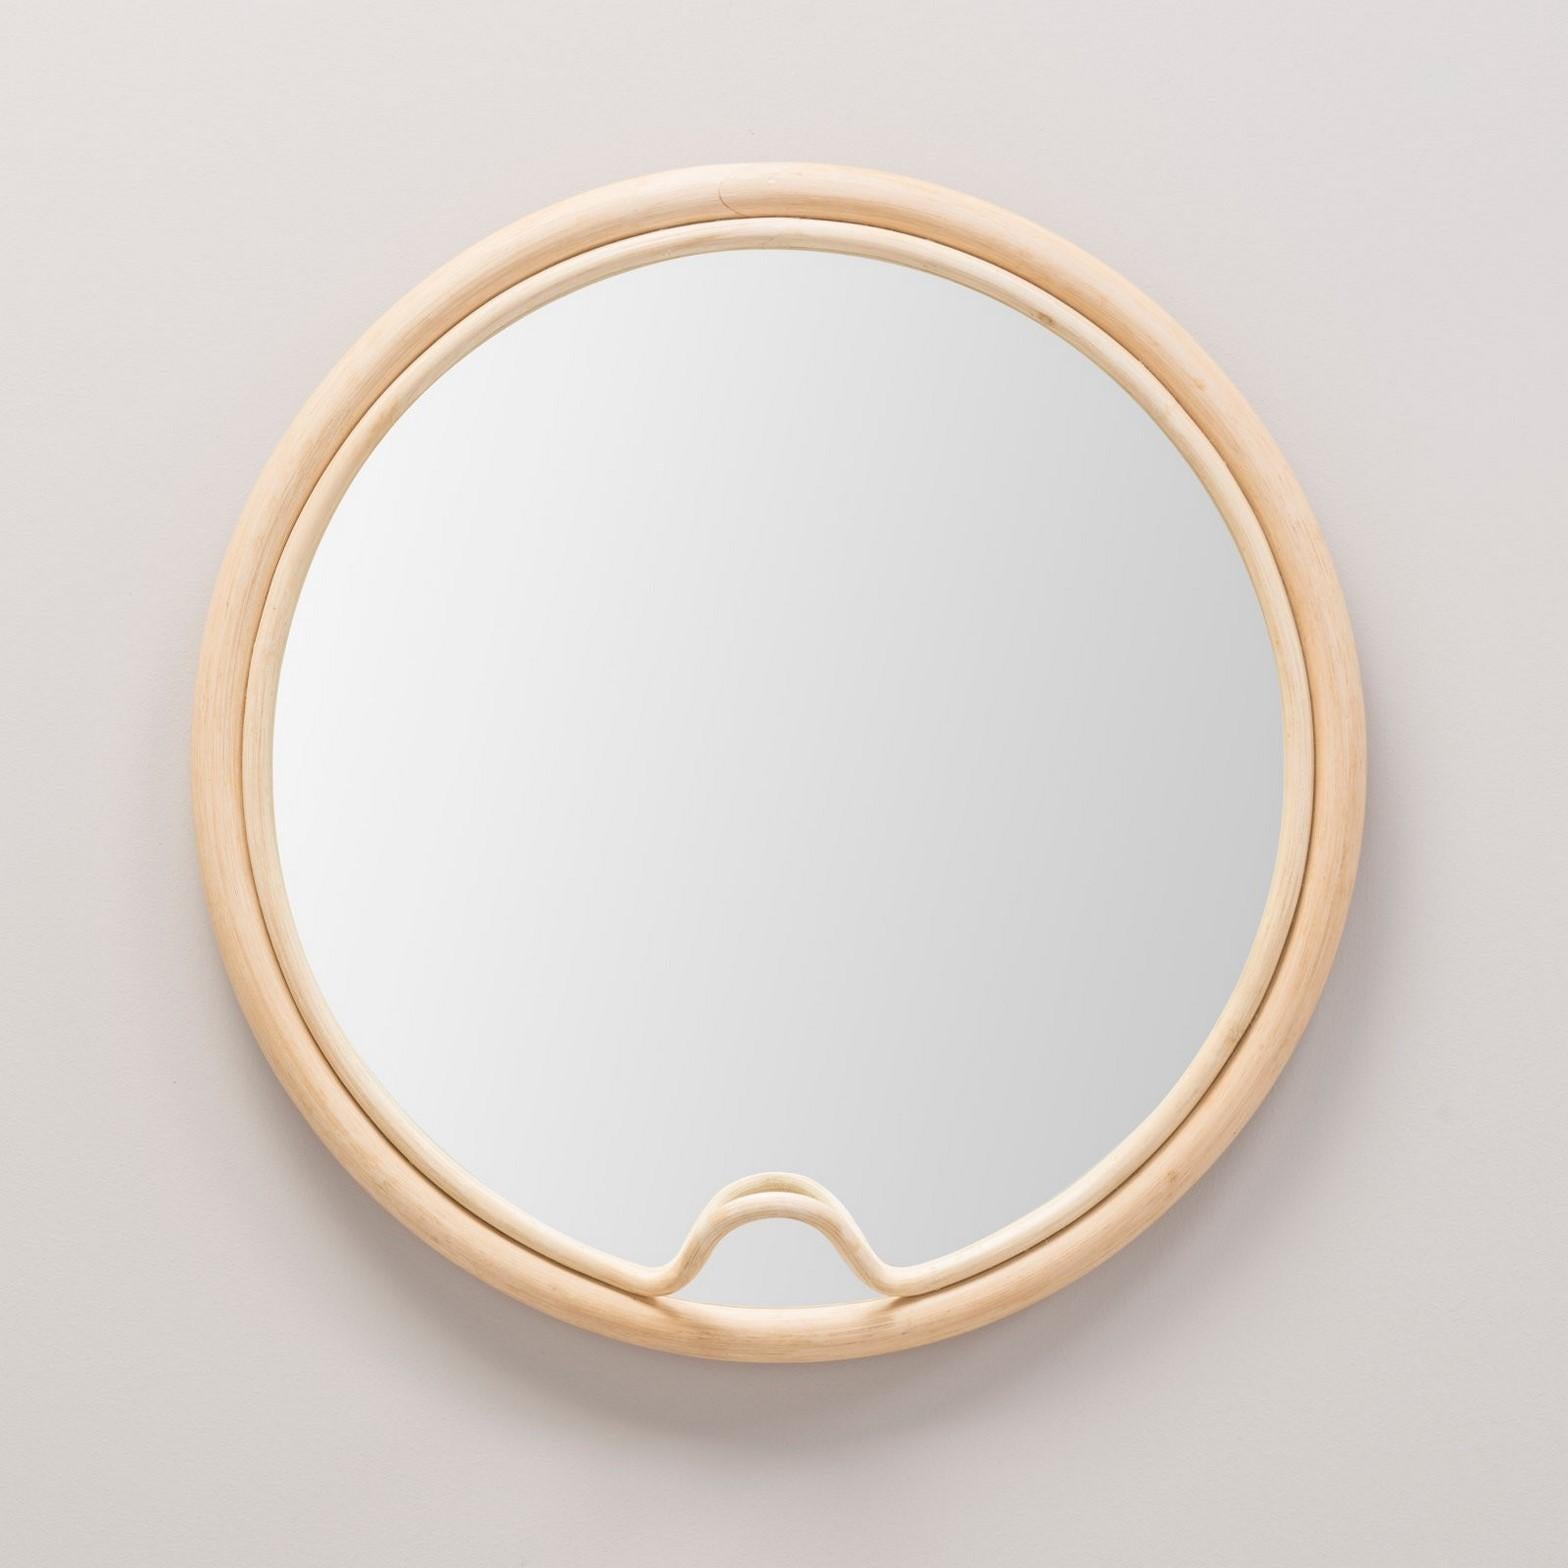 Hand-Crafted French Design Round Rattan Mirror